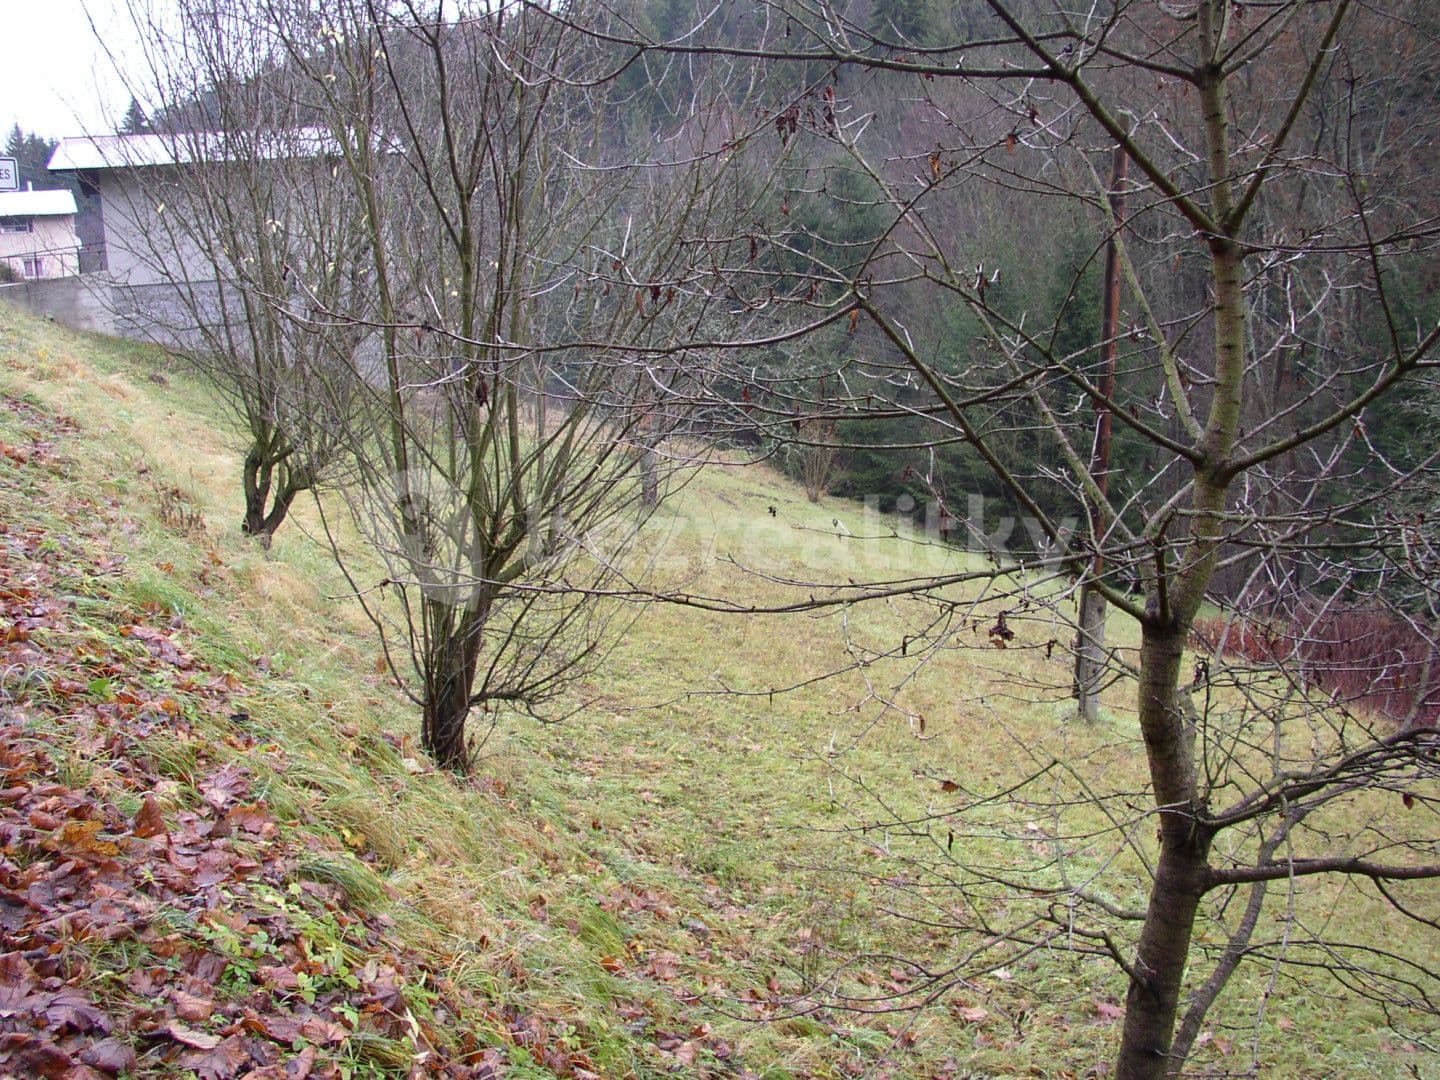 Predaj pozemku 1.180 m², Vysoké nad Jizerou, Liberecký kraj